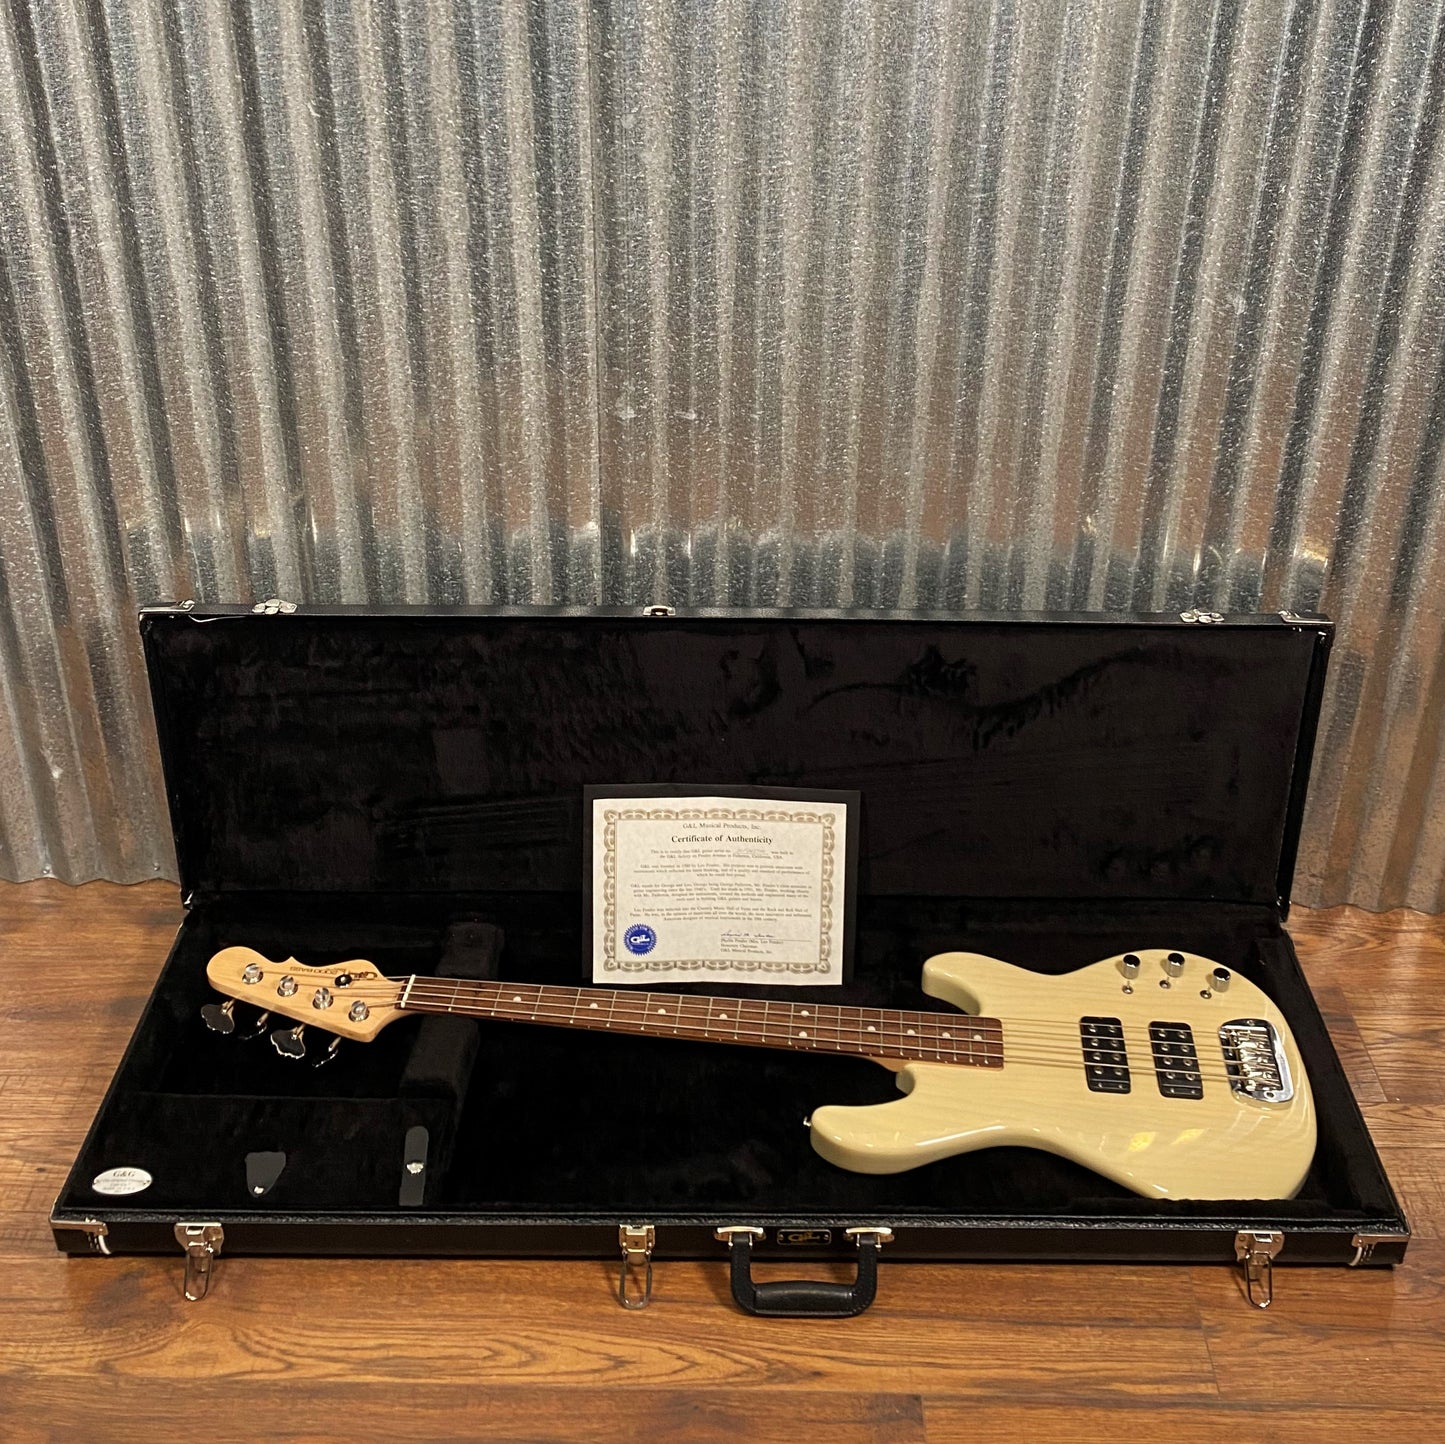 G&L USA Custom L-2000 Blonde 4 String Bass & Case L2000 #2980 Used